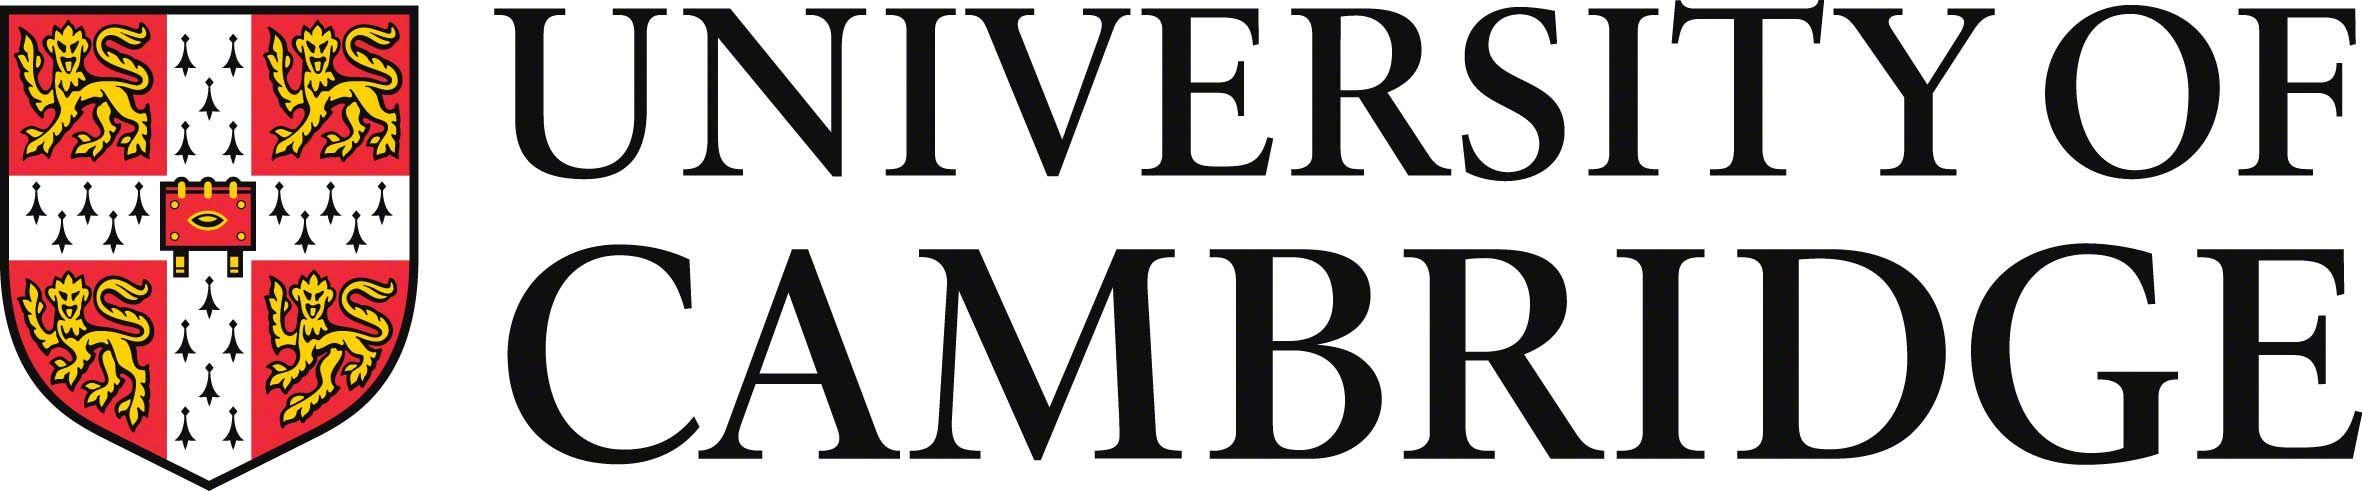 University of Cambridge Logo - University of Cambridge